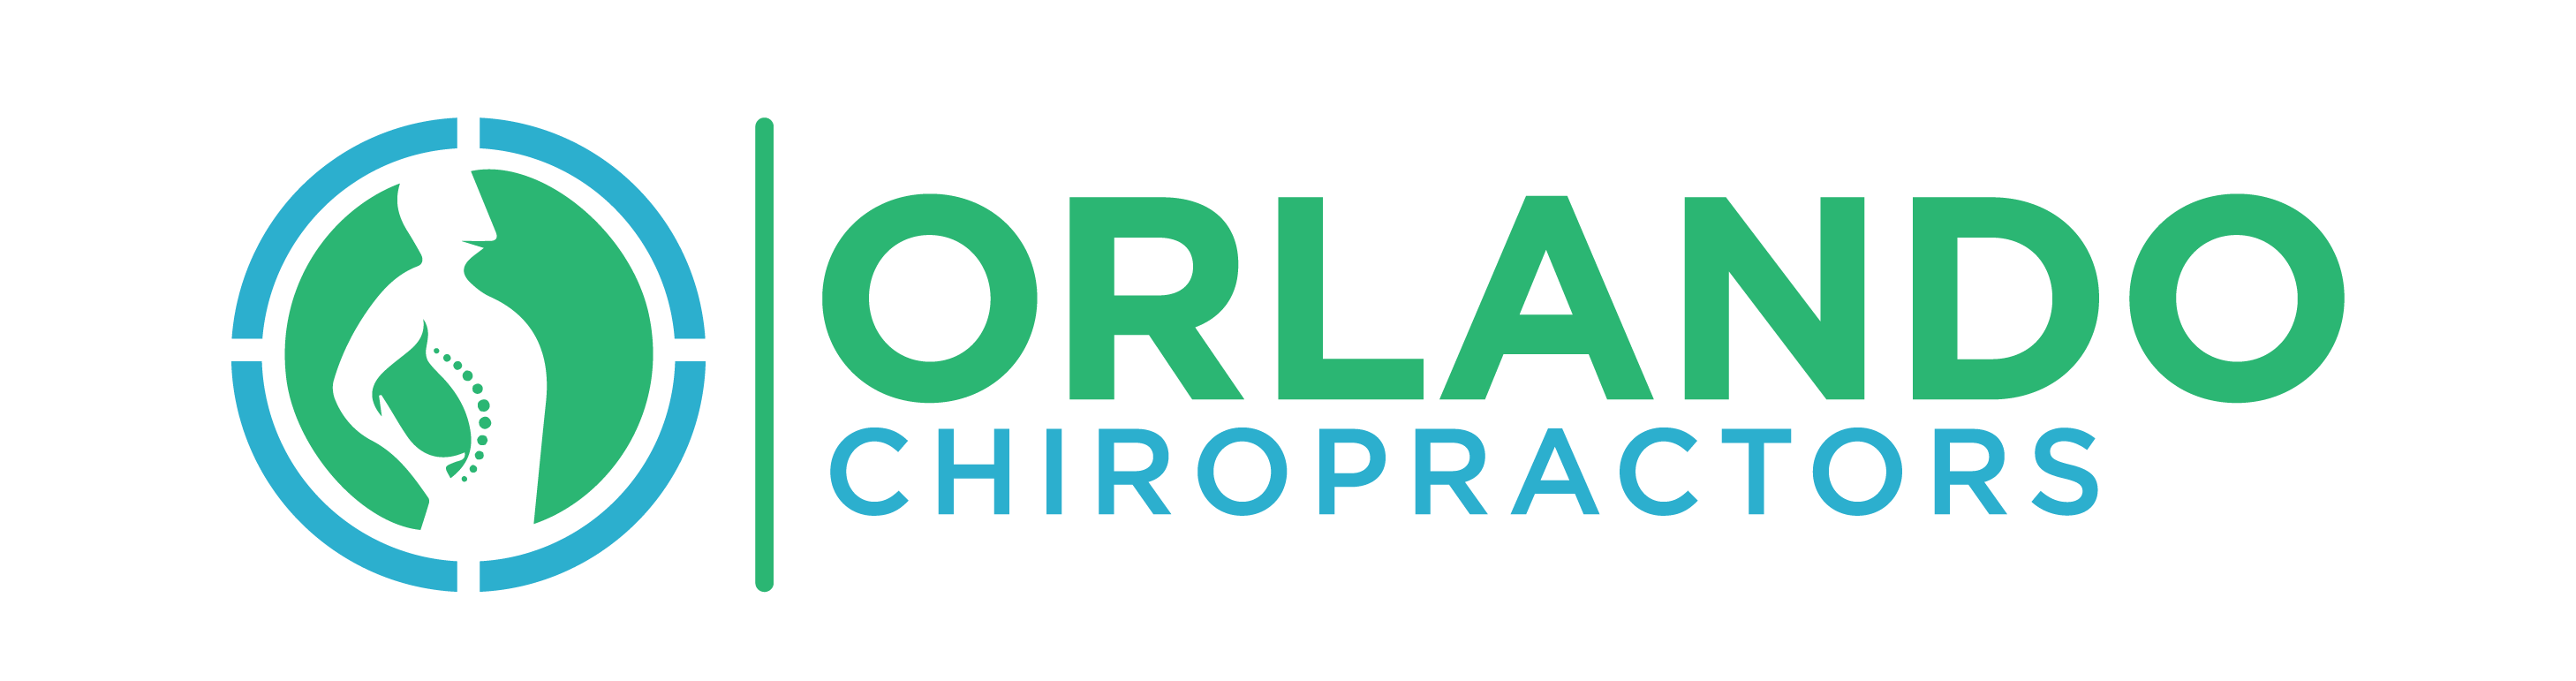 Orlando Chiropractors's Logo